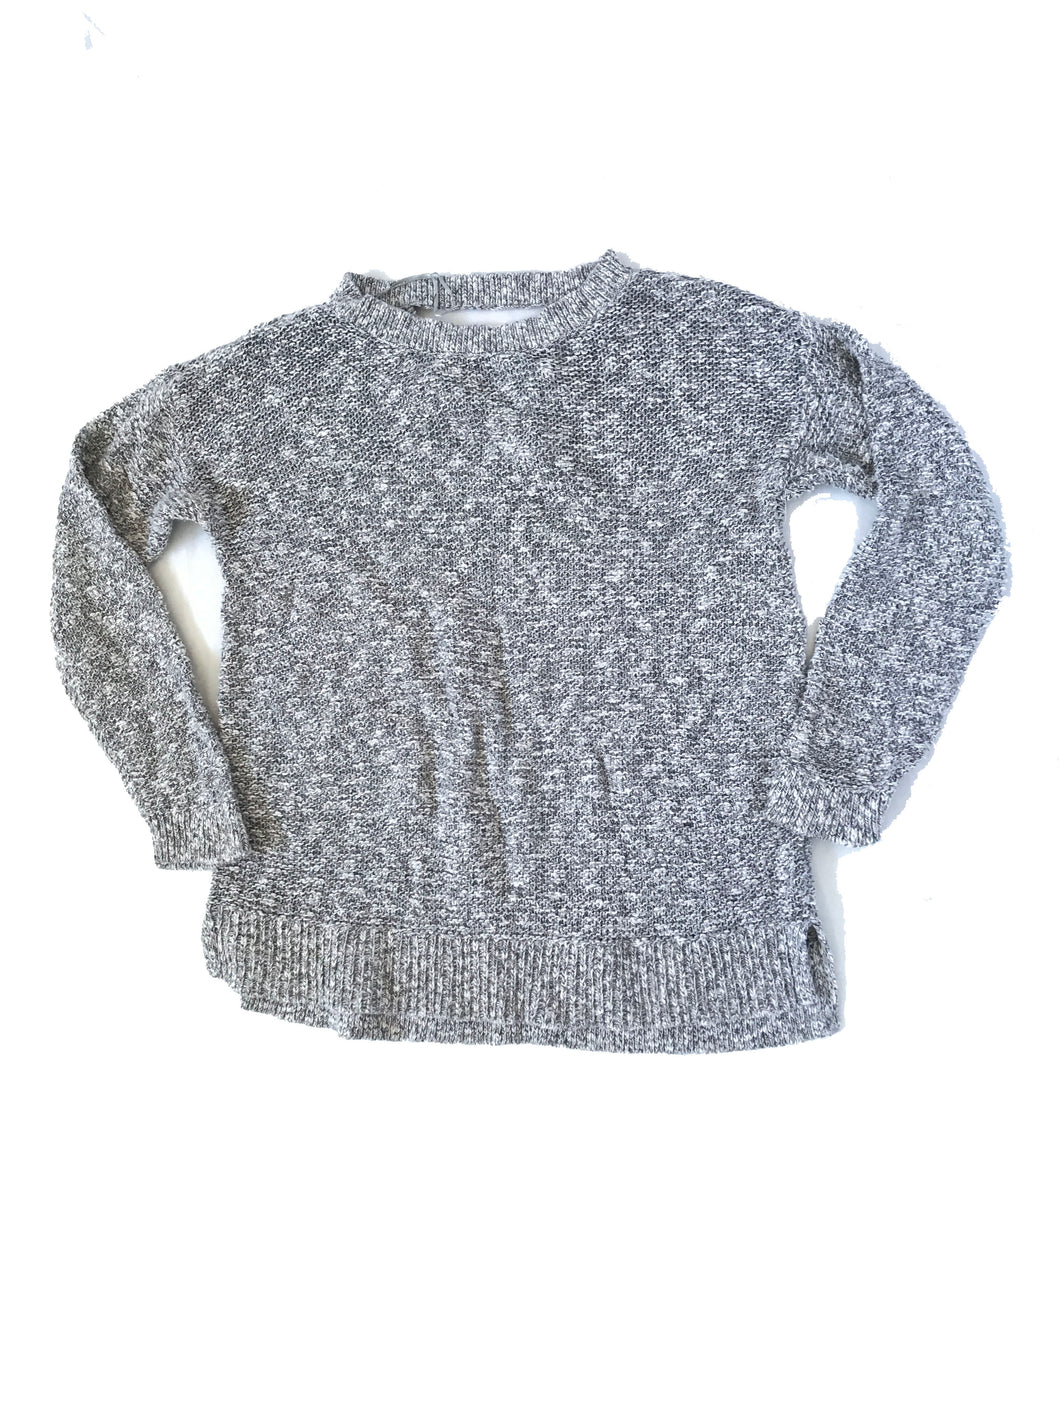 CLEARANCE XL Motherhood Maternity Knit Sweater